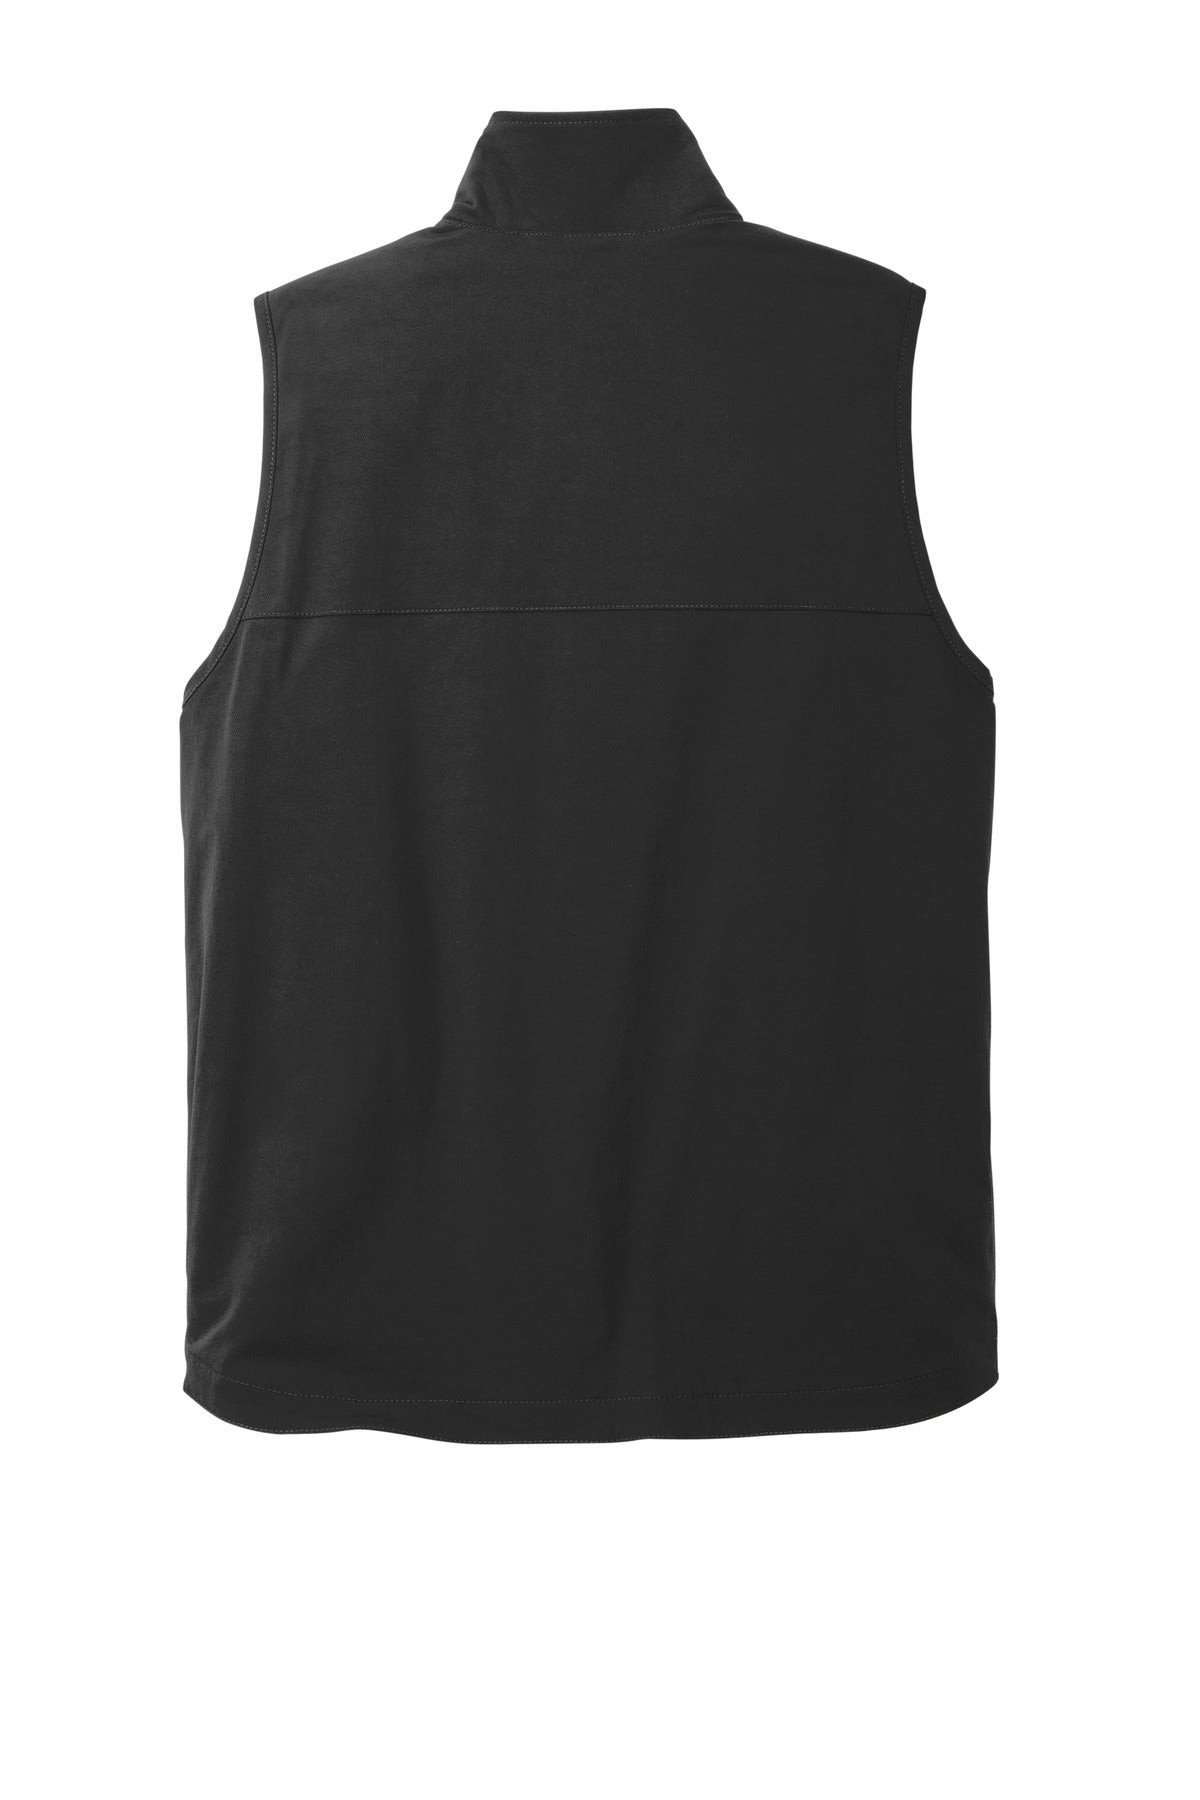 Carhartt Super Dux Soft Shell Vest CT105535 - BT Imprintables Shirts